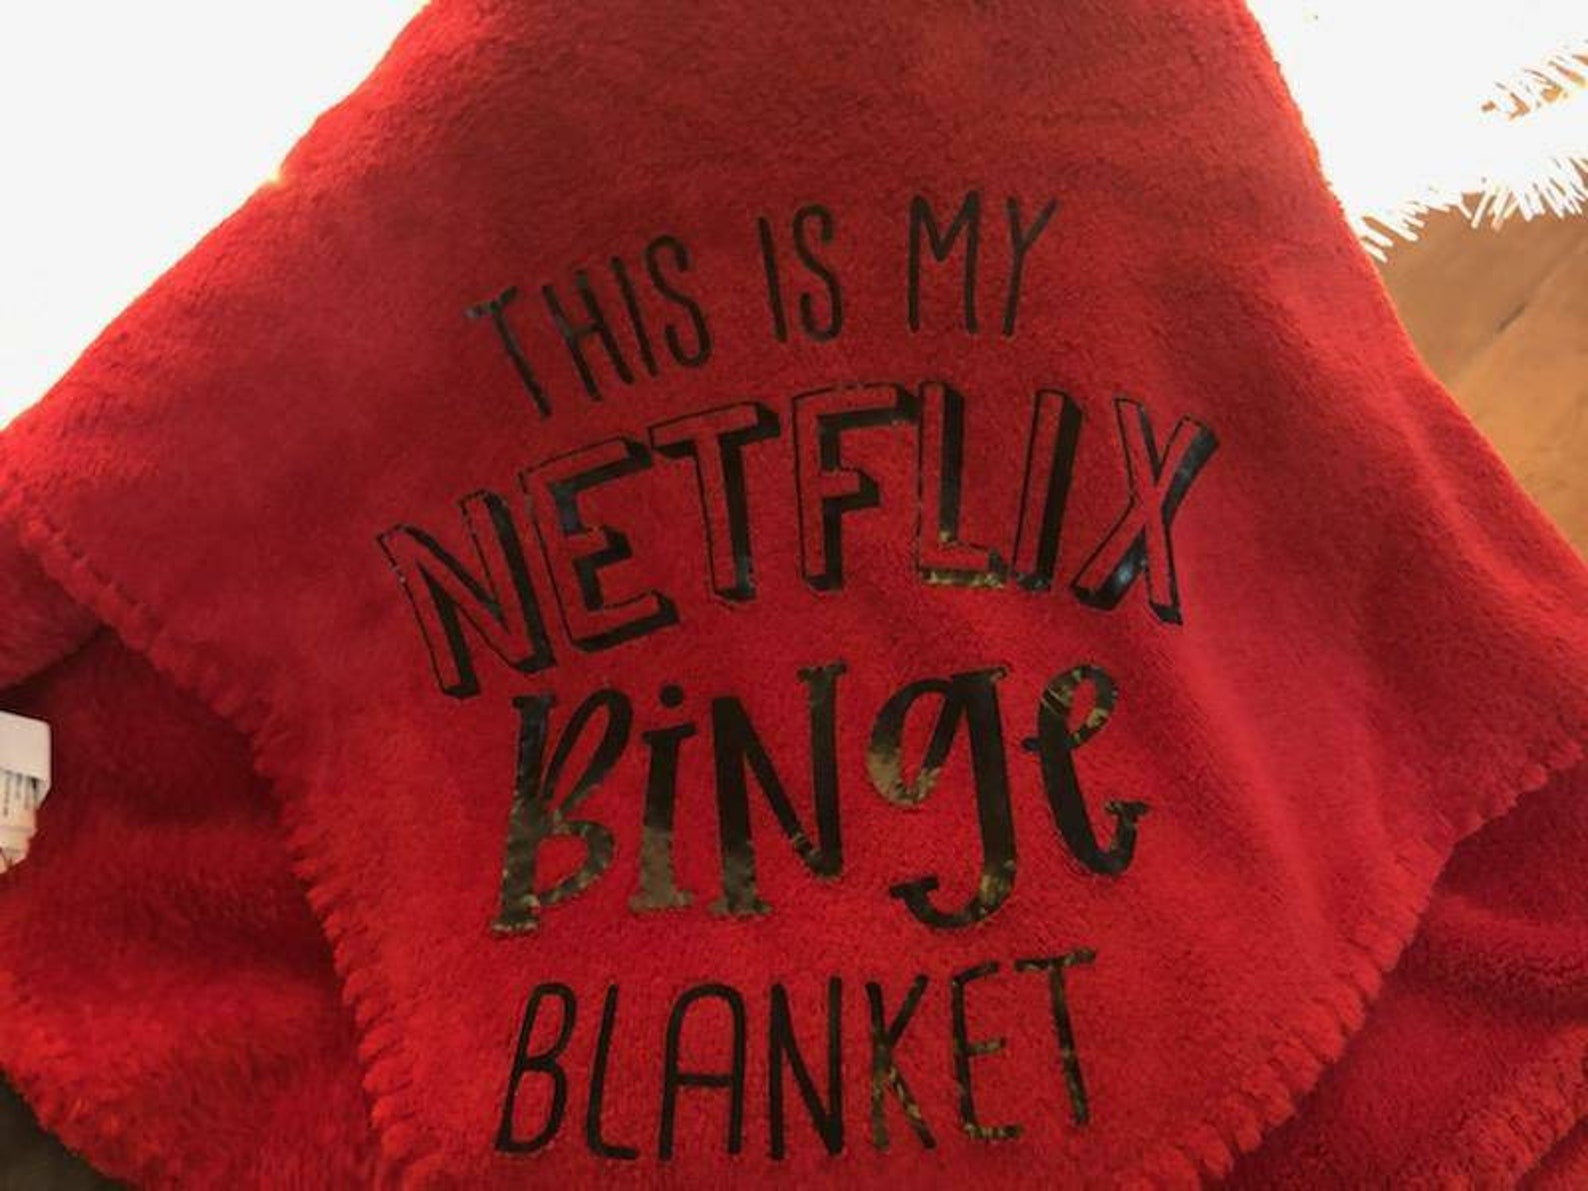 Netflix Binge watching blanket | Etsy